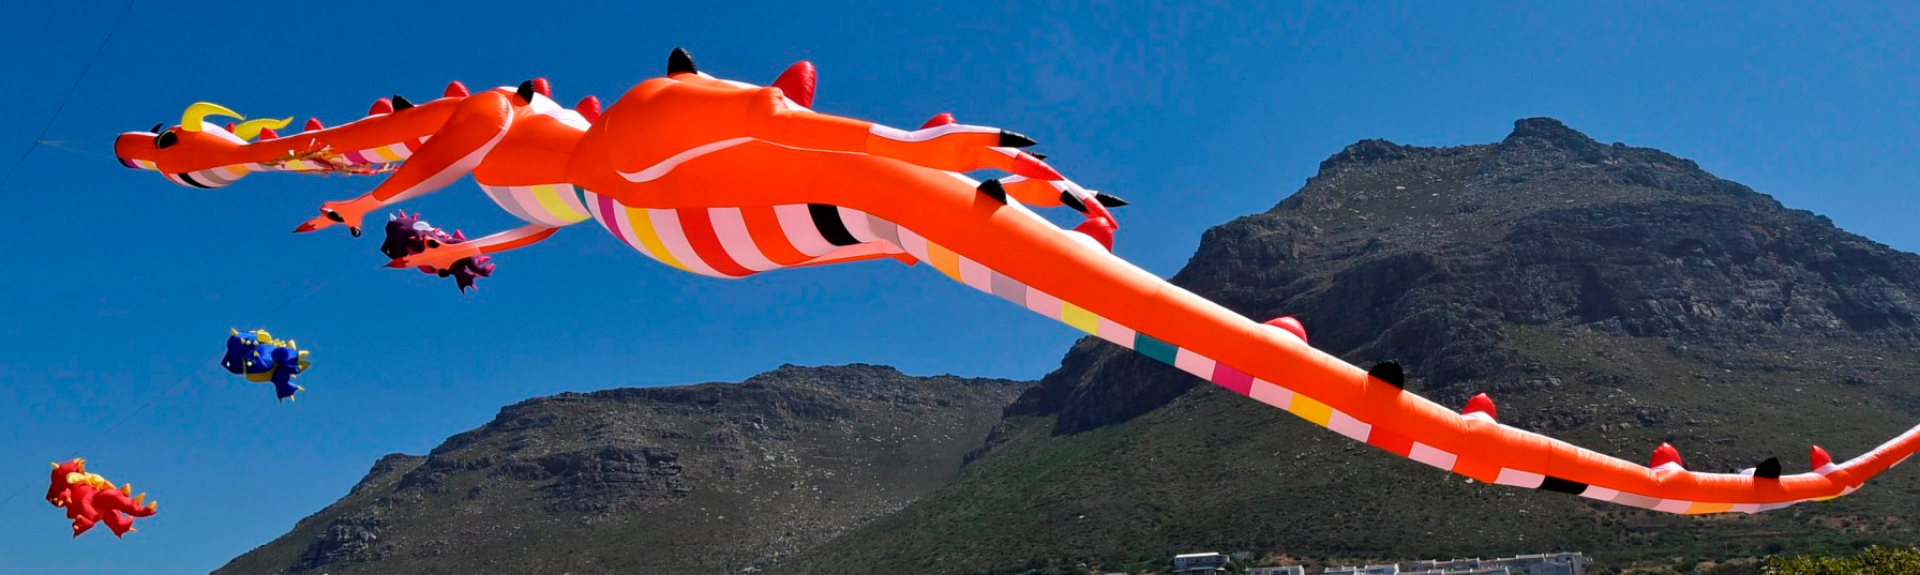 25th Cape Town International Kite Festival